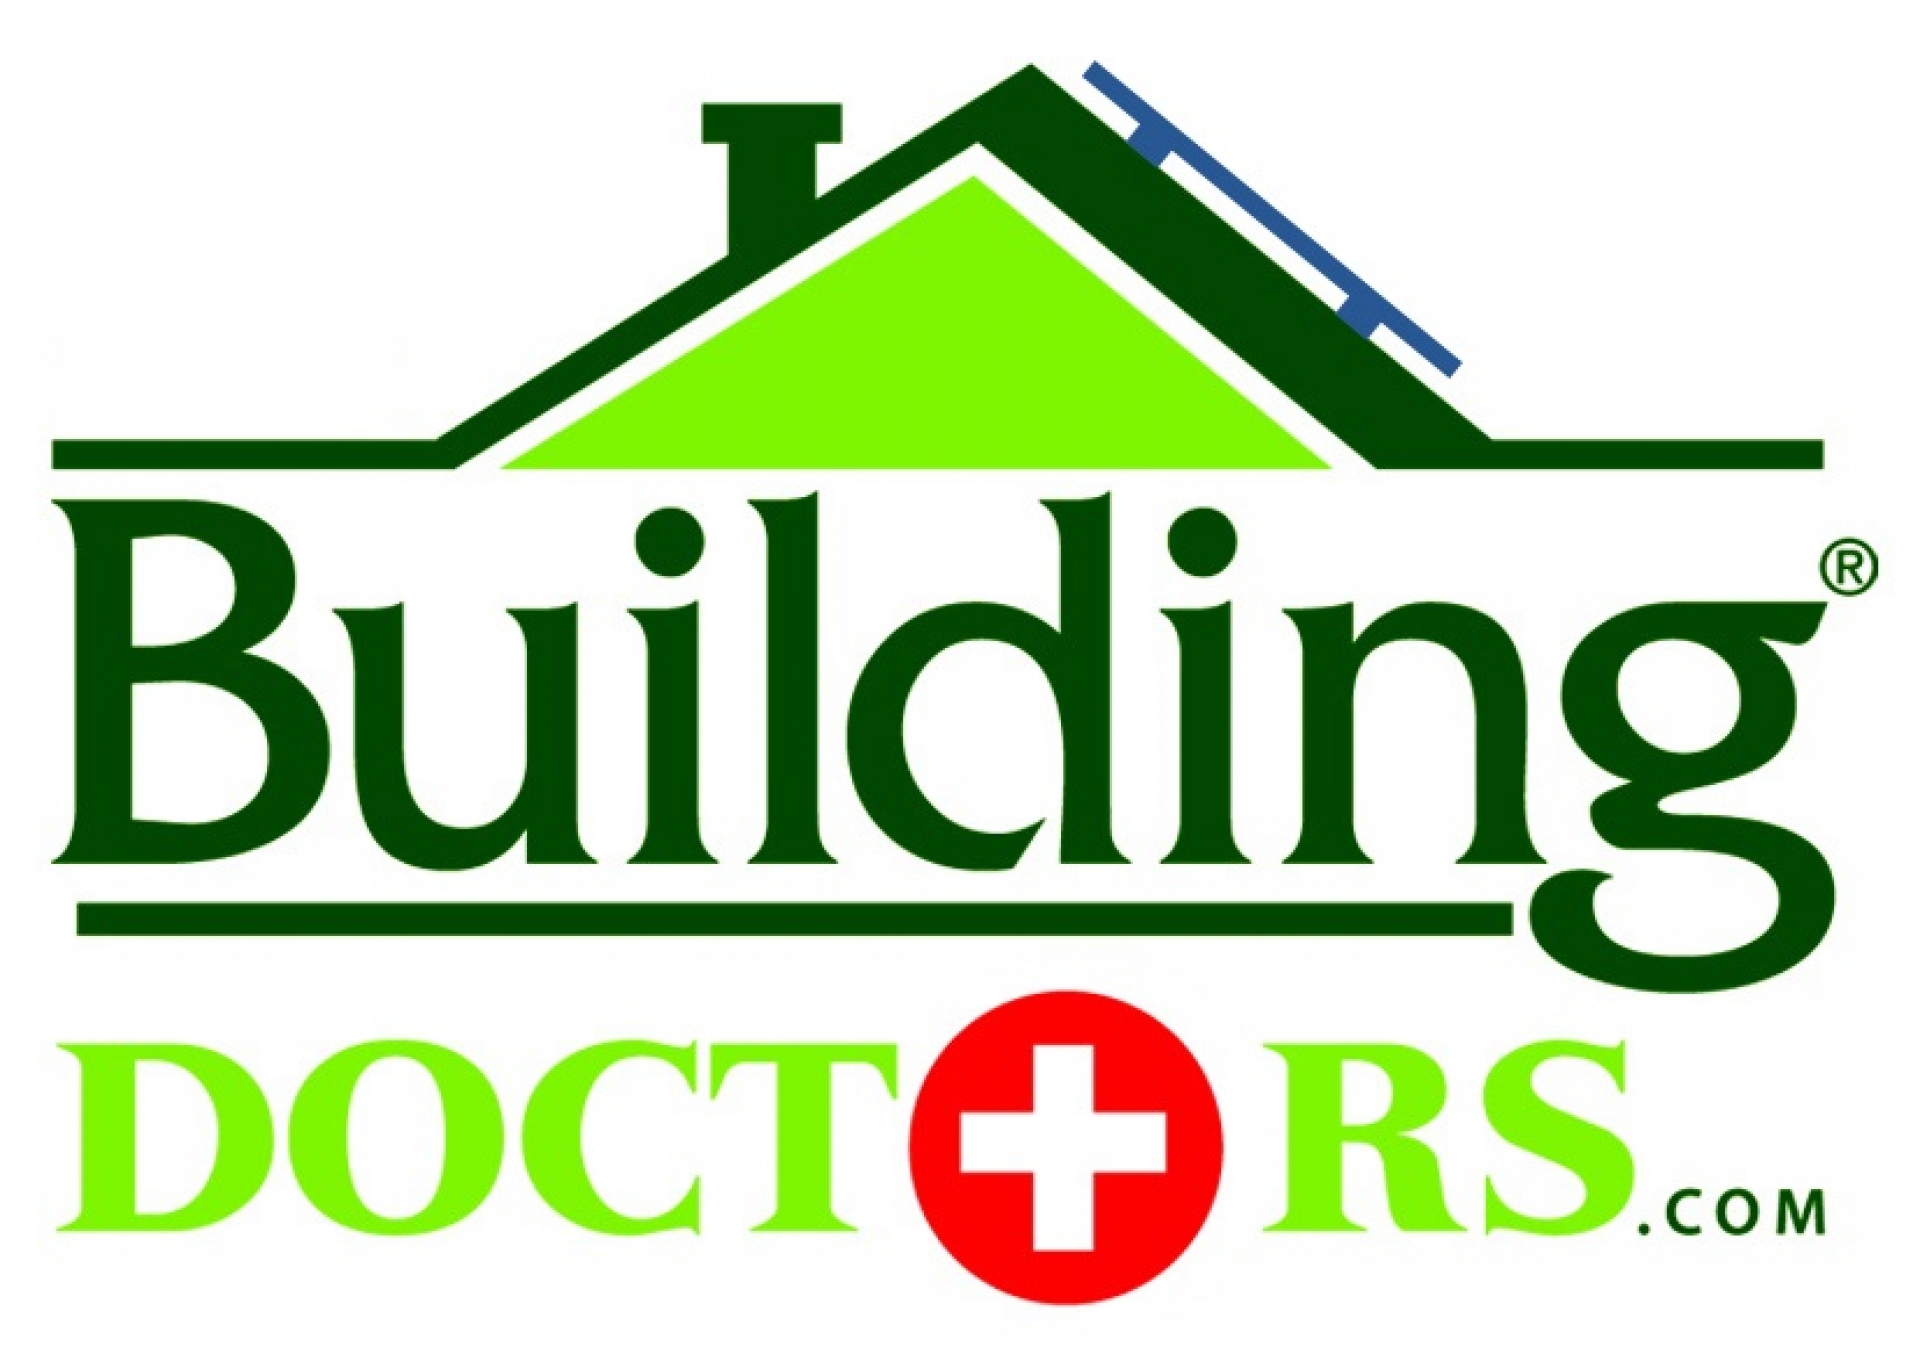 Building Doctors, Inc